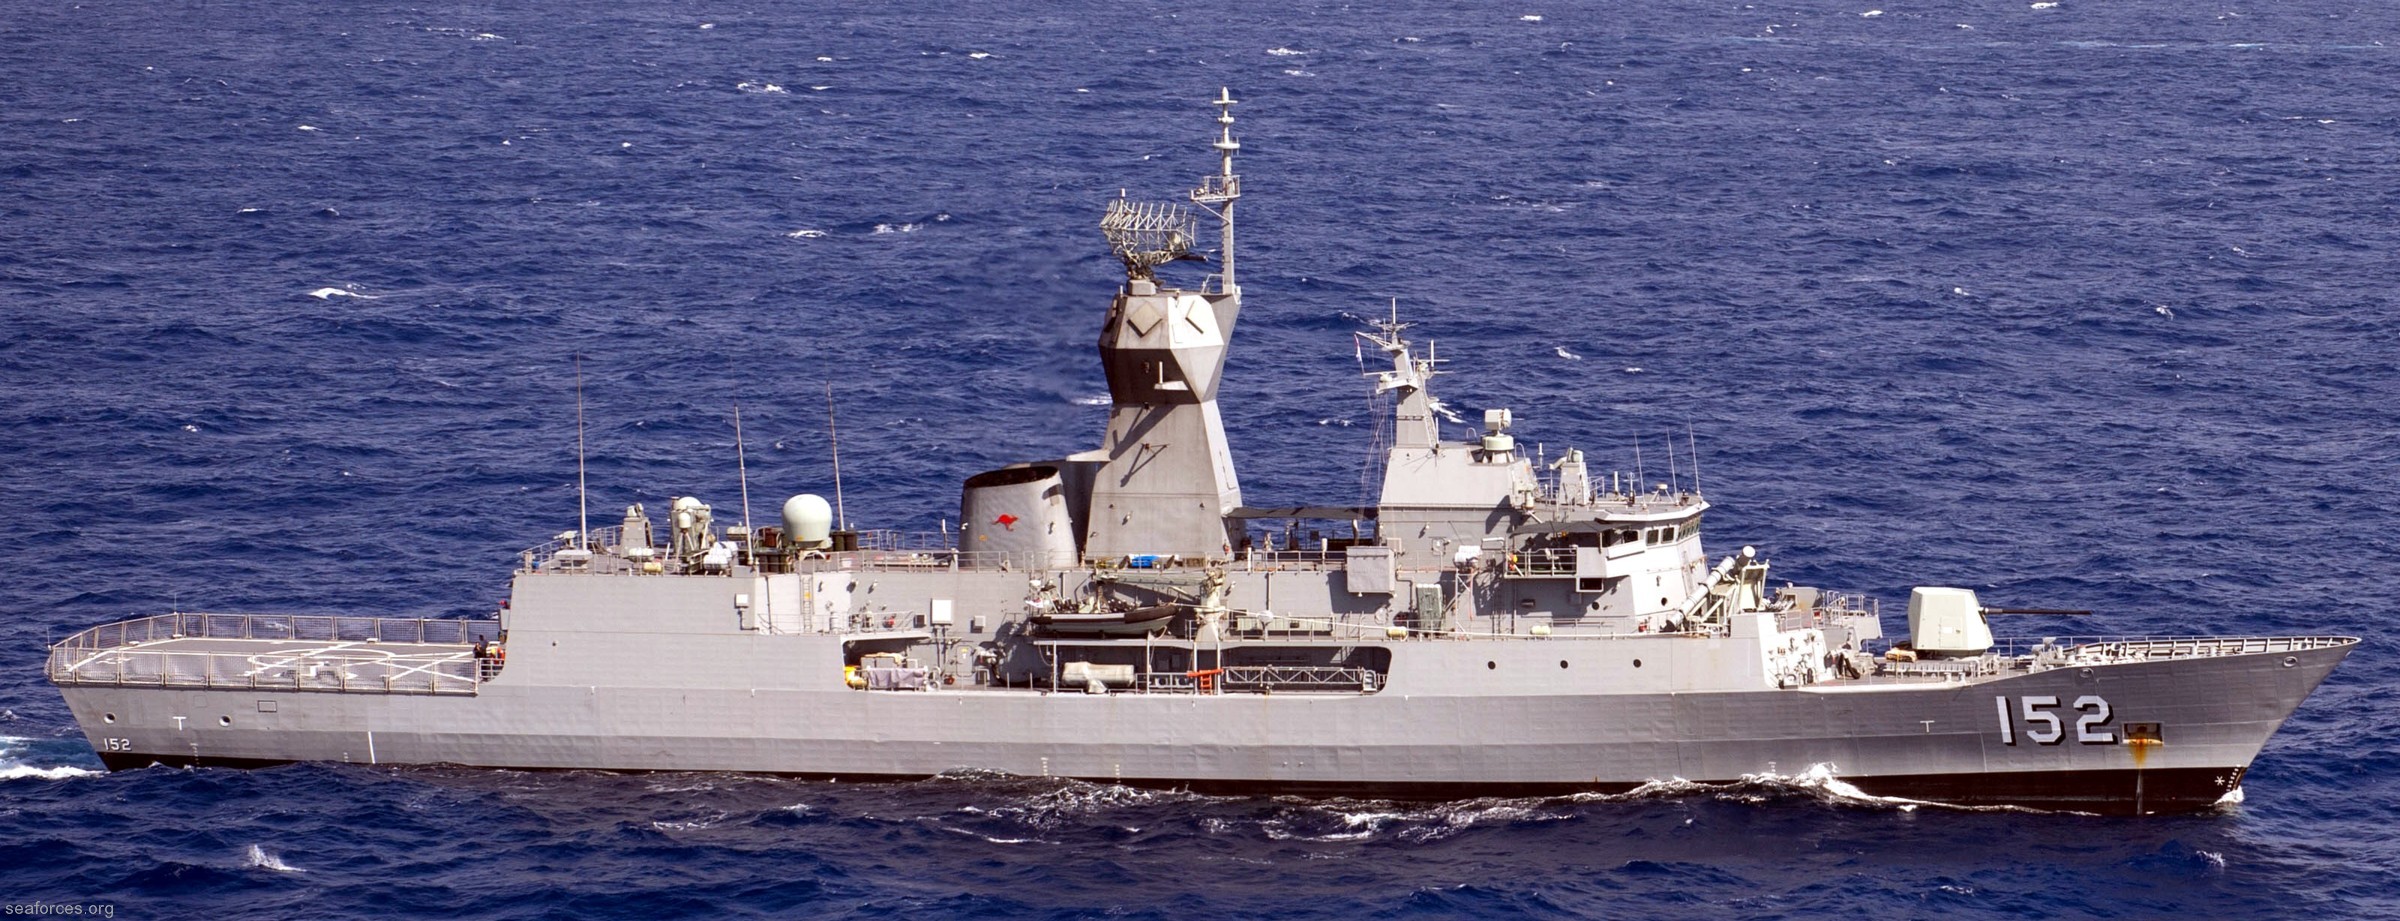 ffh-152 hmas warramunga anzac class frigate royal australian navy 2016 20 rimpac